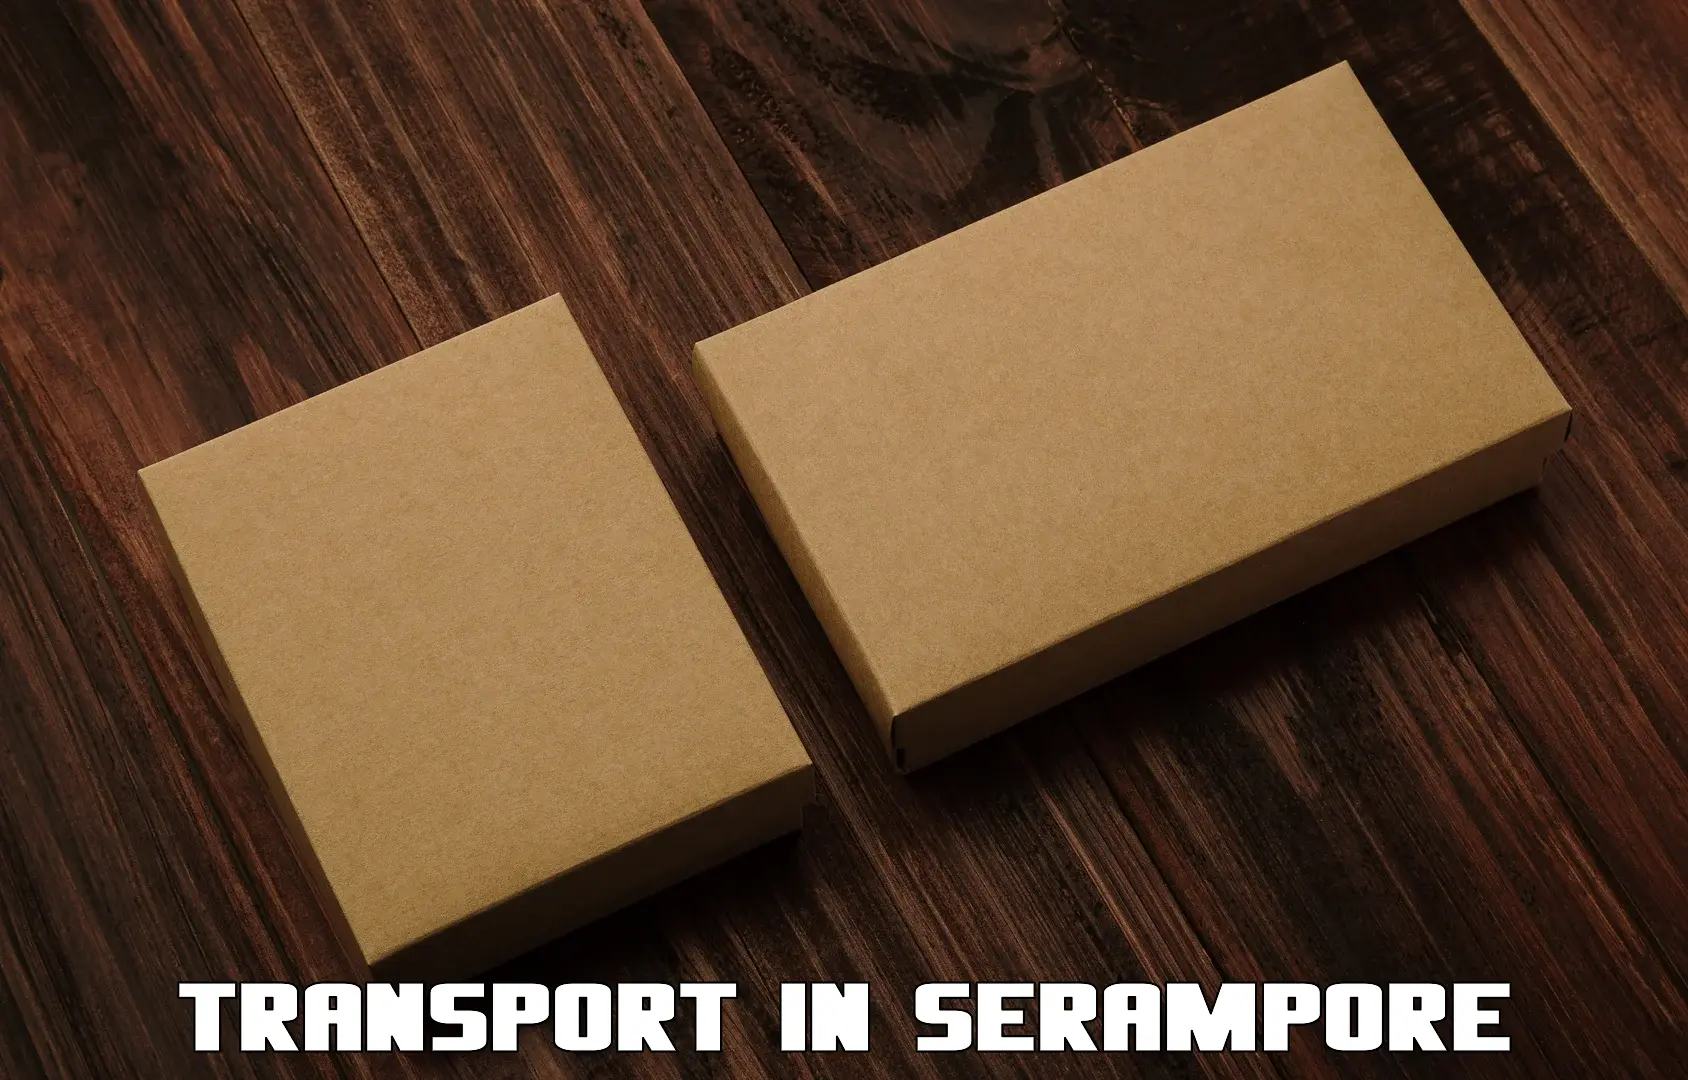 Transport in sharing in Serampore